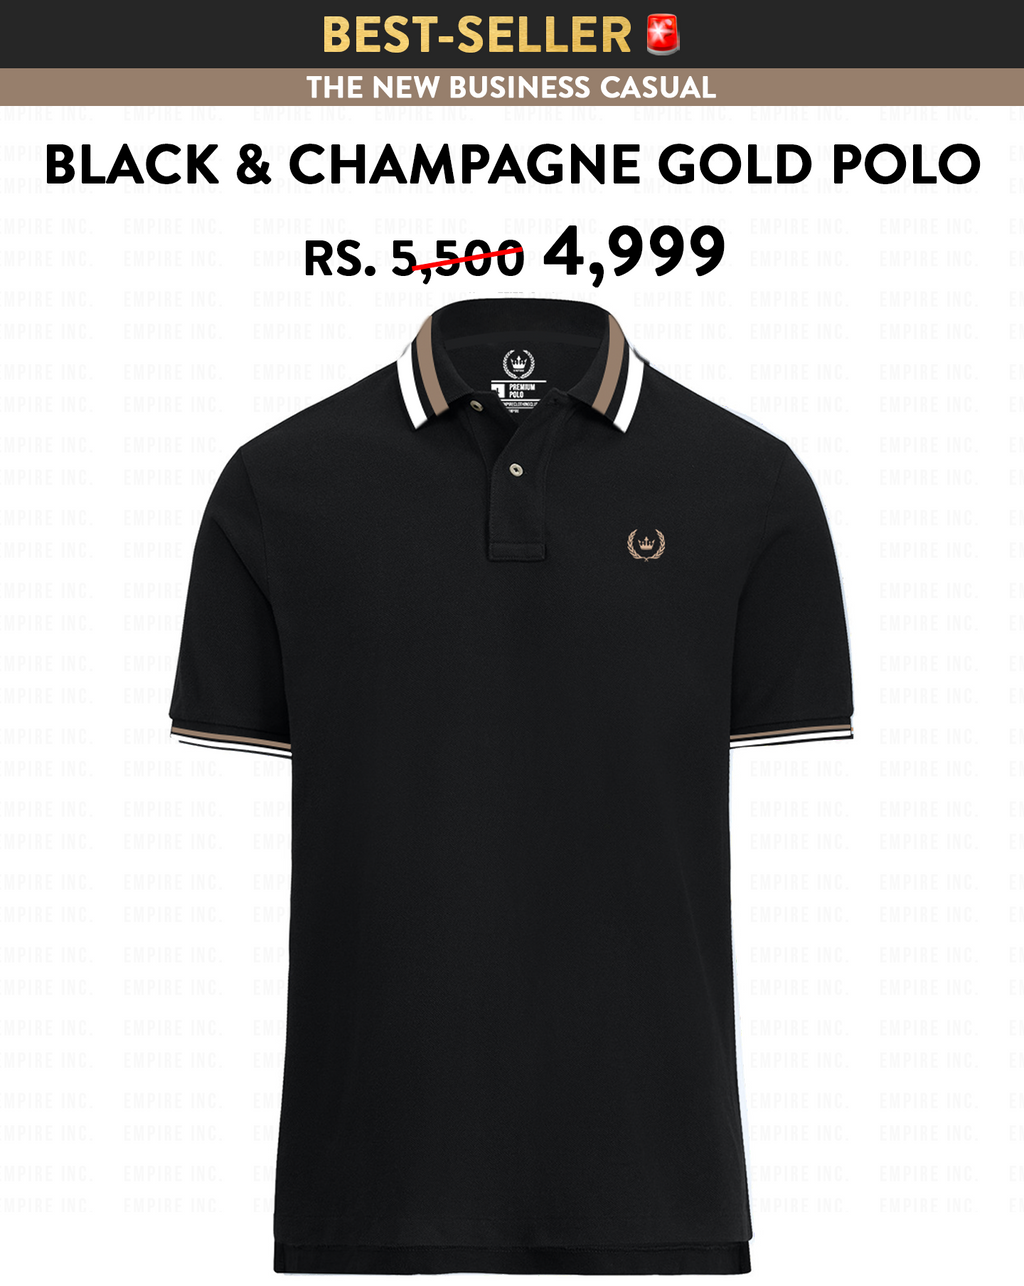 Black & Champagne Gold Polo